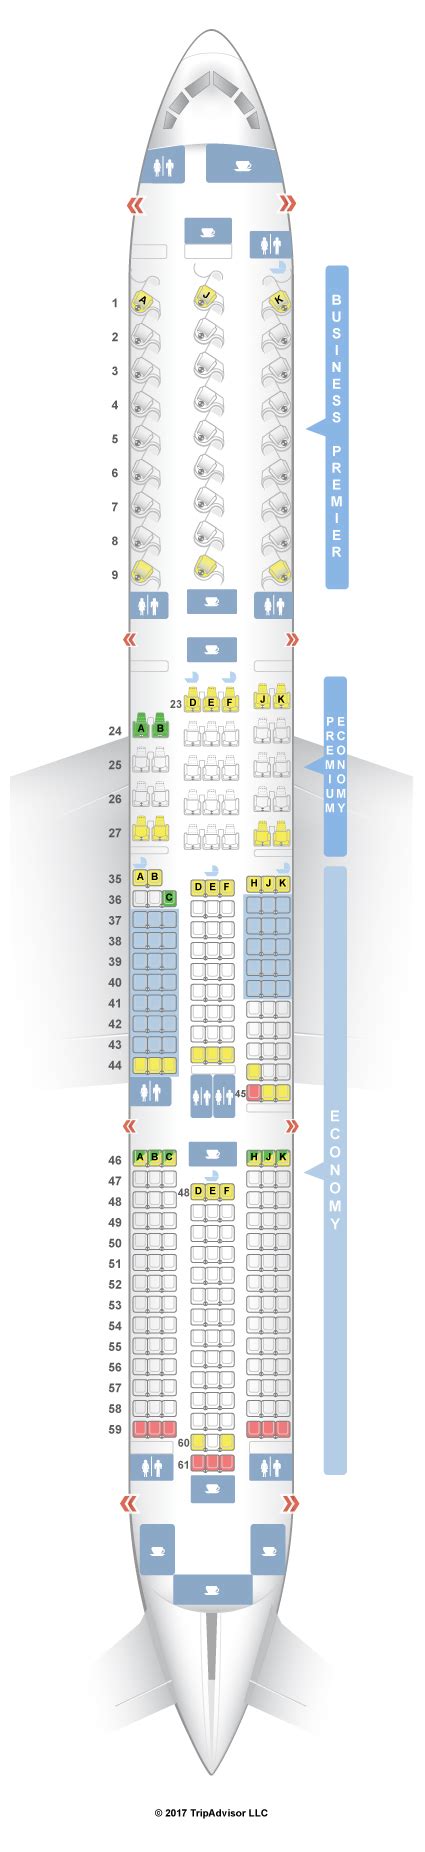 Seatguru Seat Map Air New Zealand Boeing 787 9 V2 789